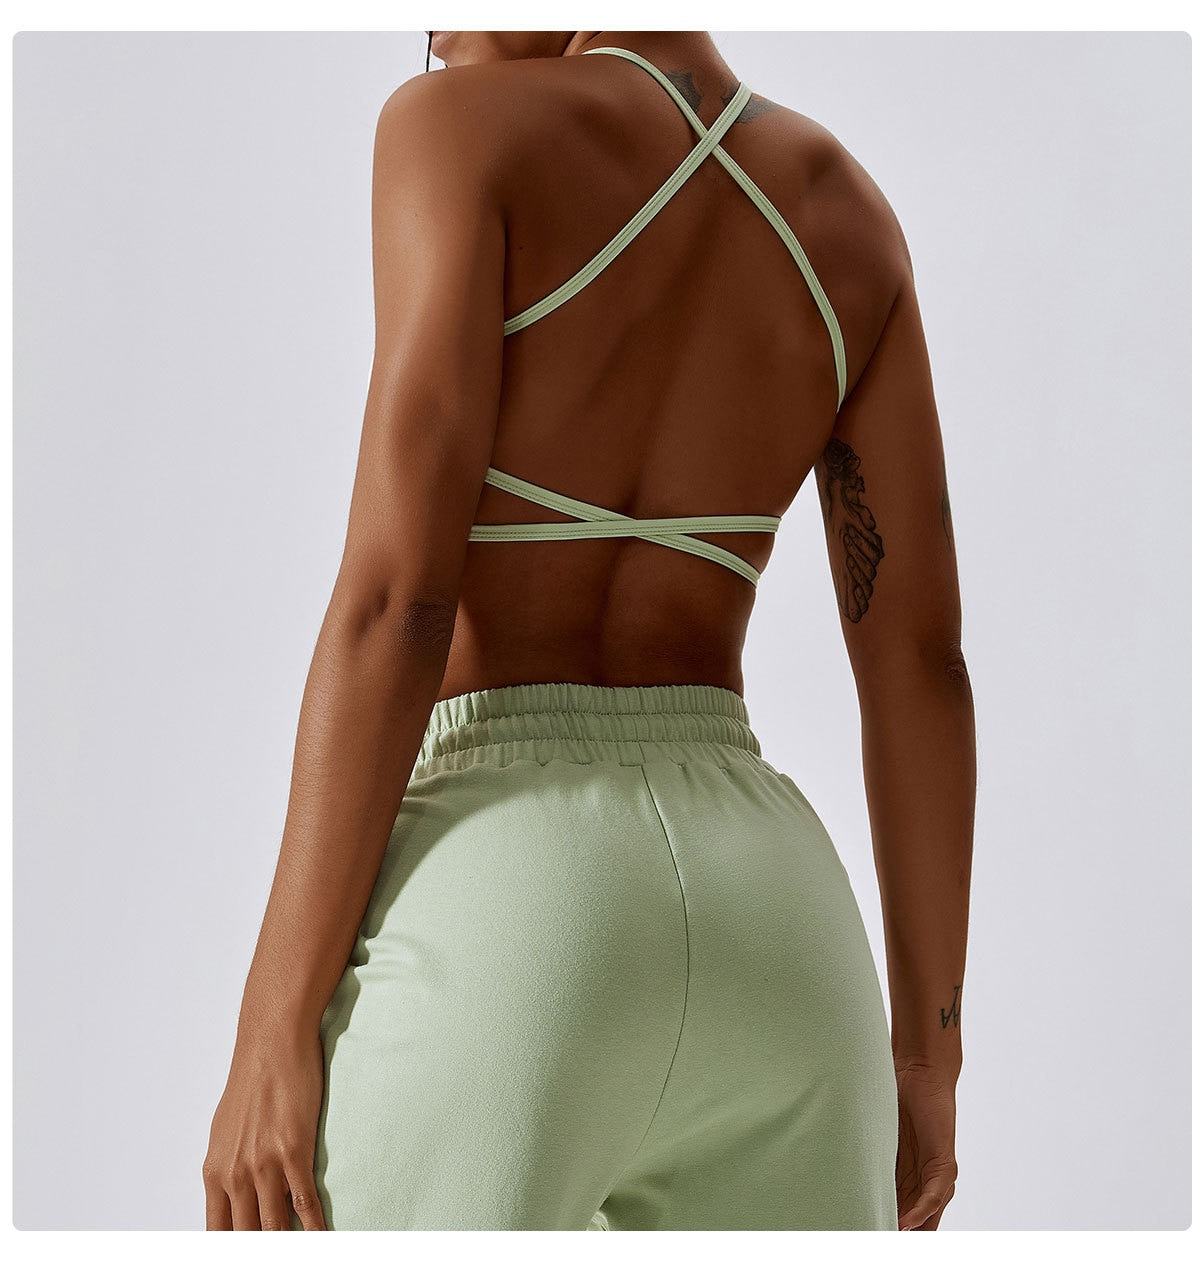 Fast Drying Nude Feeling Yoga Bra Gym High-intensity Push Up Workout Running Sports Underwear Women Shockproof Back Fitness Top   61.99 EZYSELLA SHOP